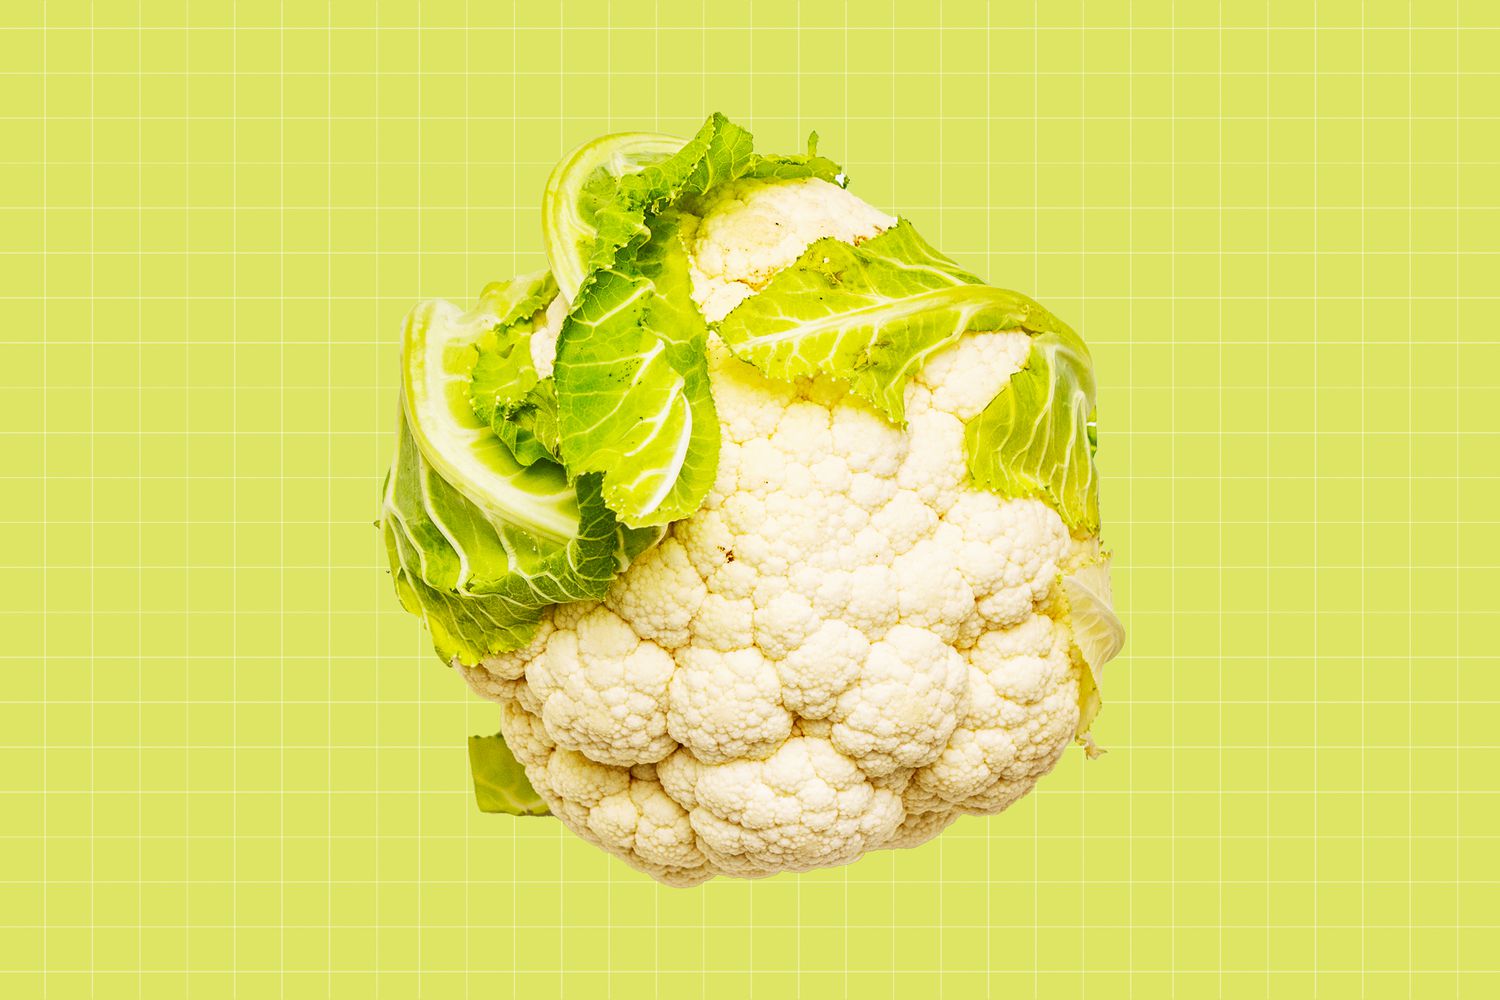 A head of cauliflower on a designed background